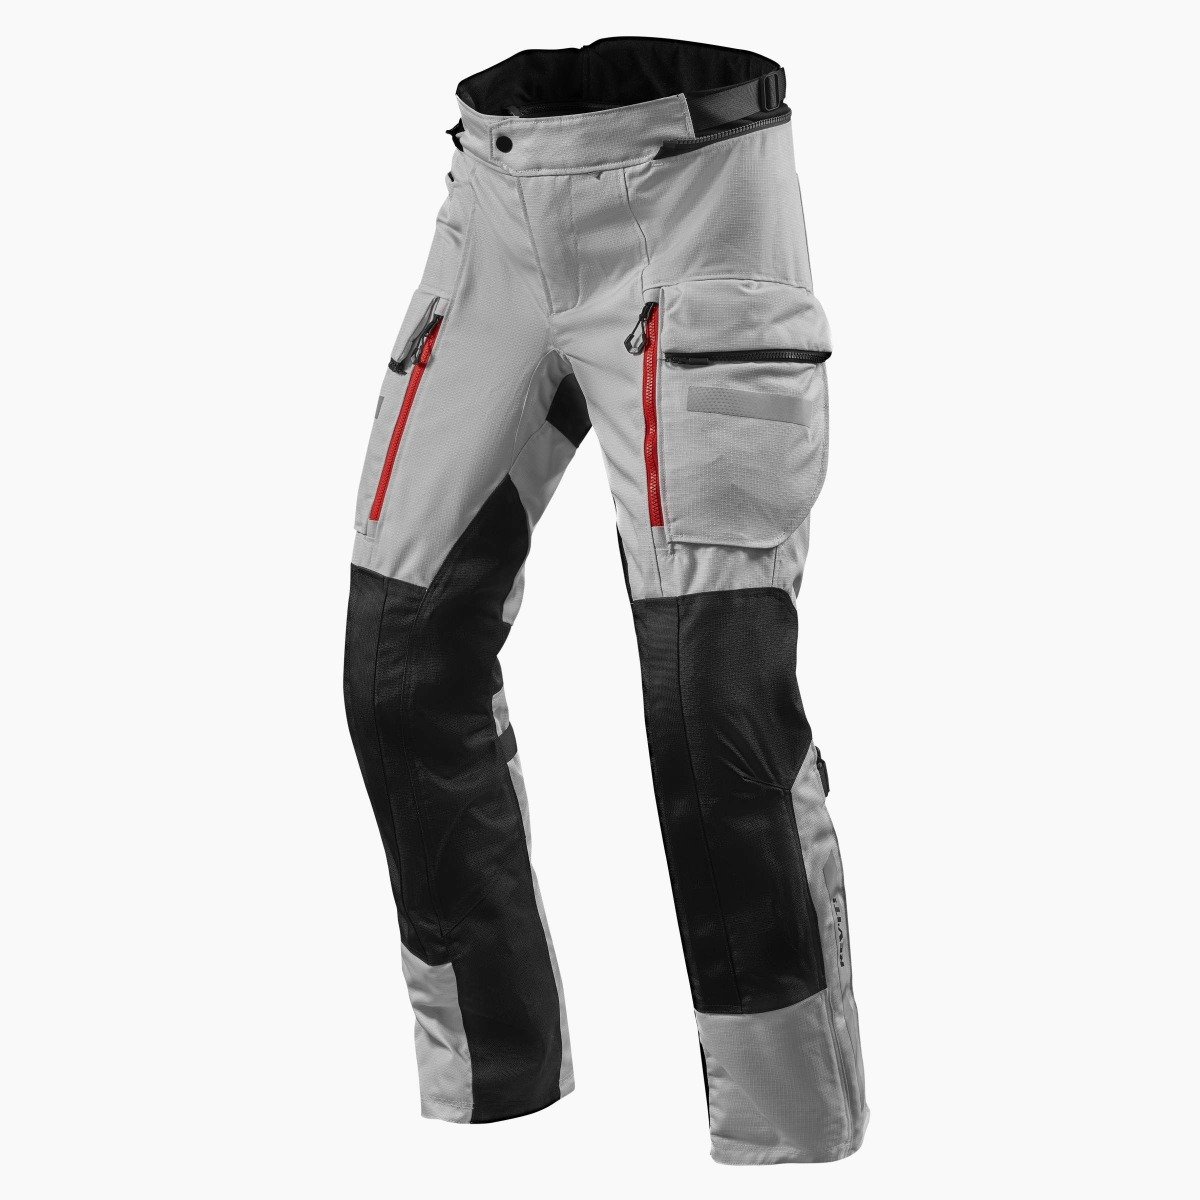 Image of REV'IT! Sand 4 H2O Short Silver Black Motorcycle Pants Talla 3XL